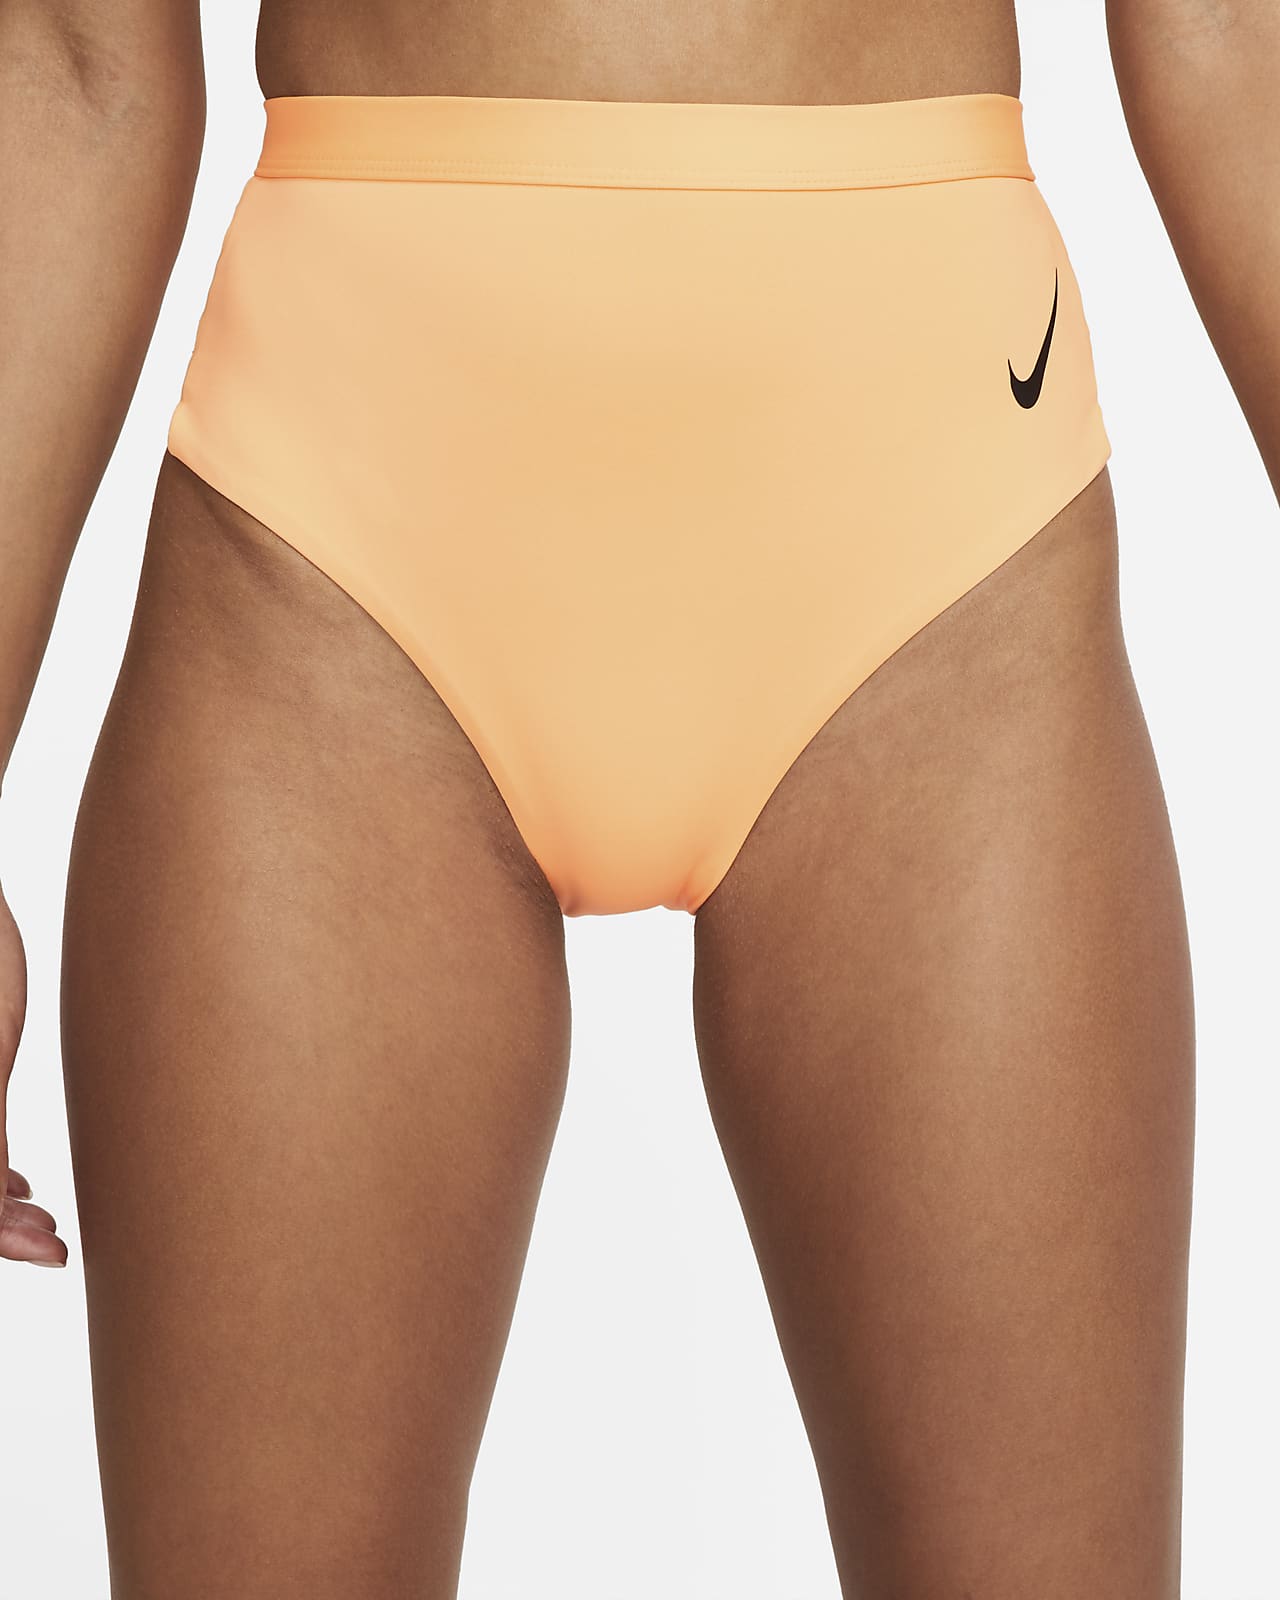 Nike Sneakerkini Women's High Waist Cheeky Bottom.